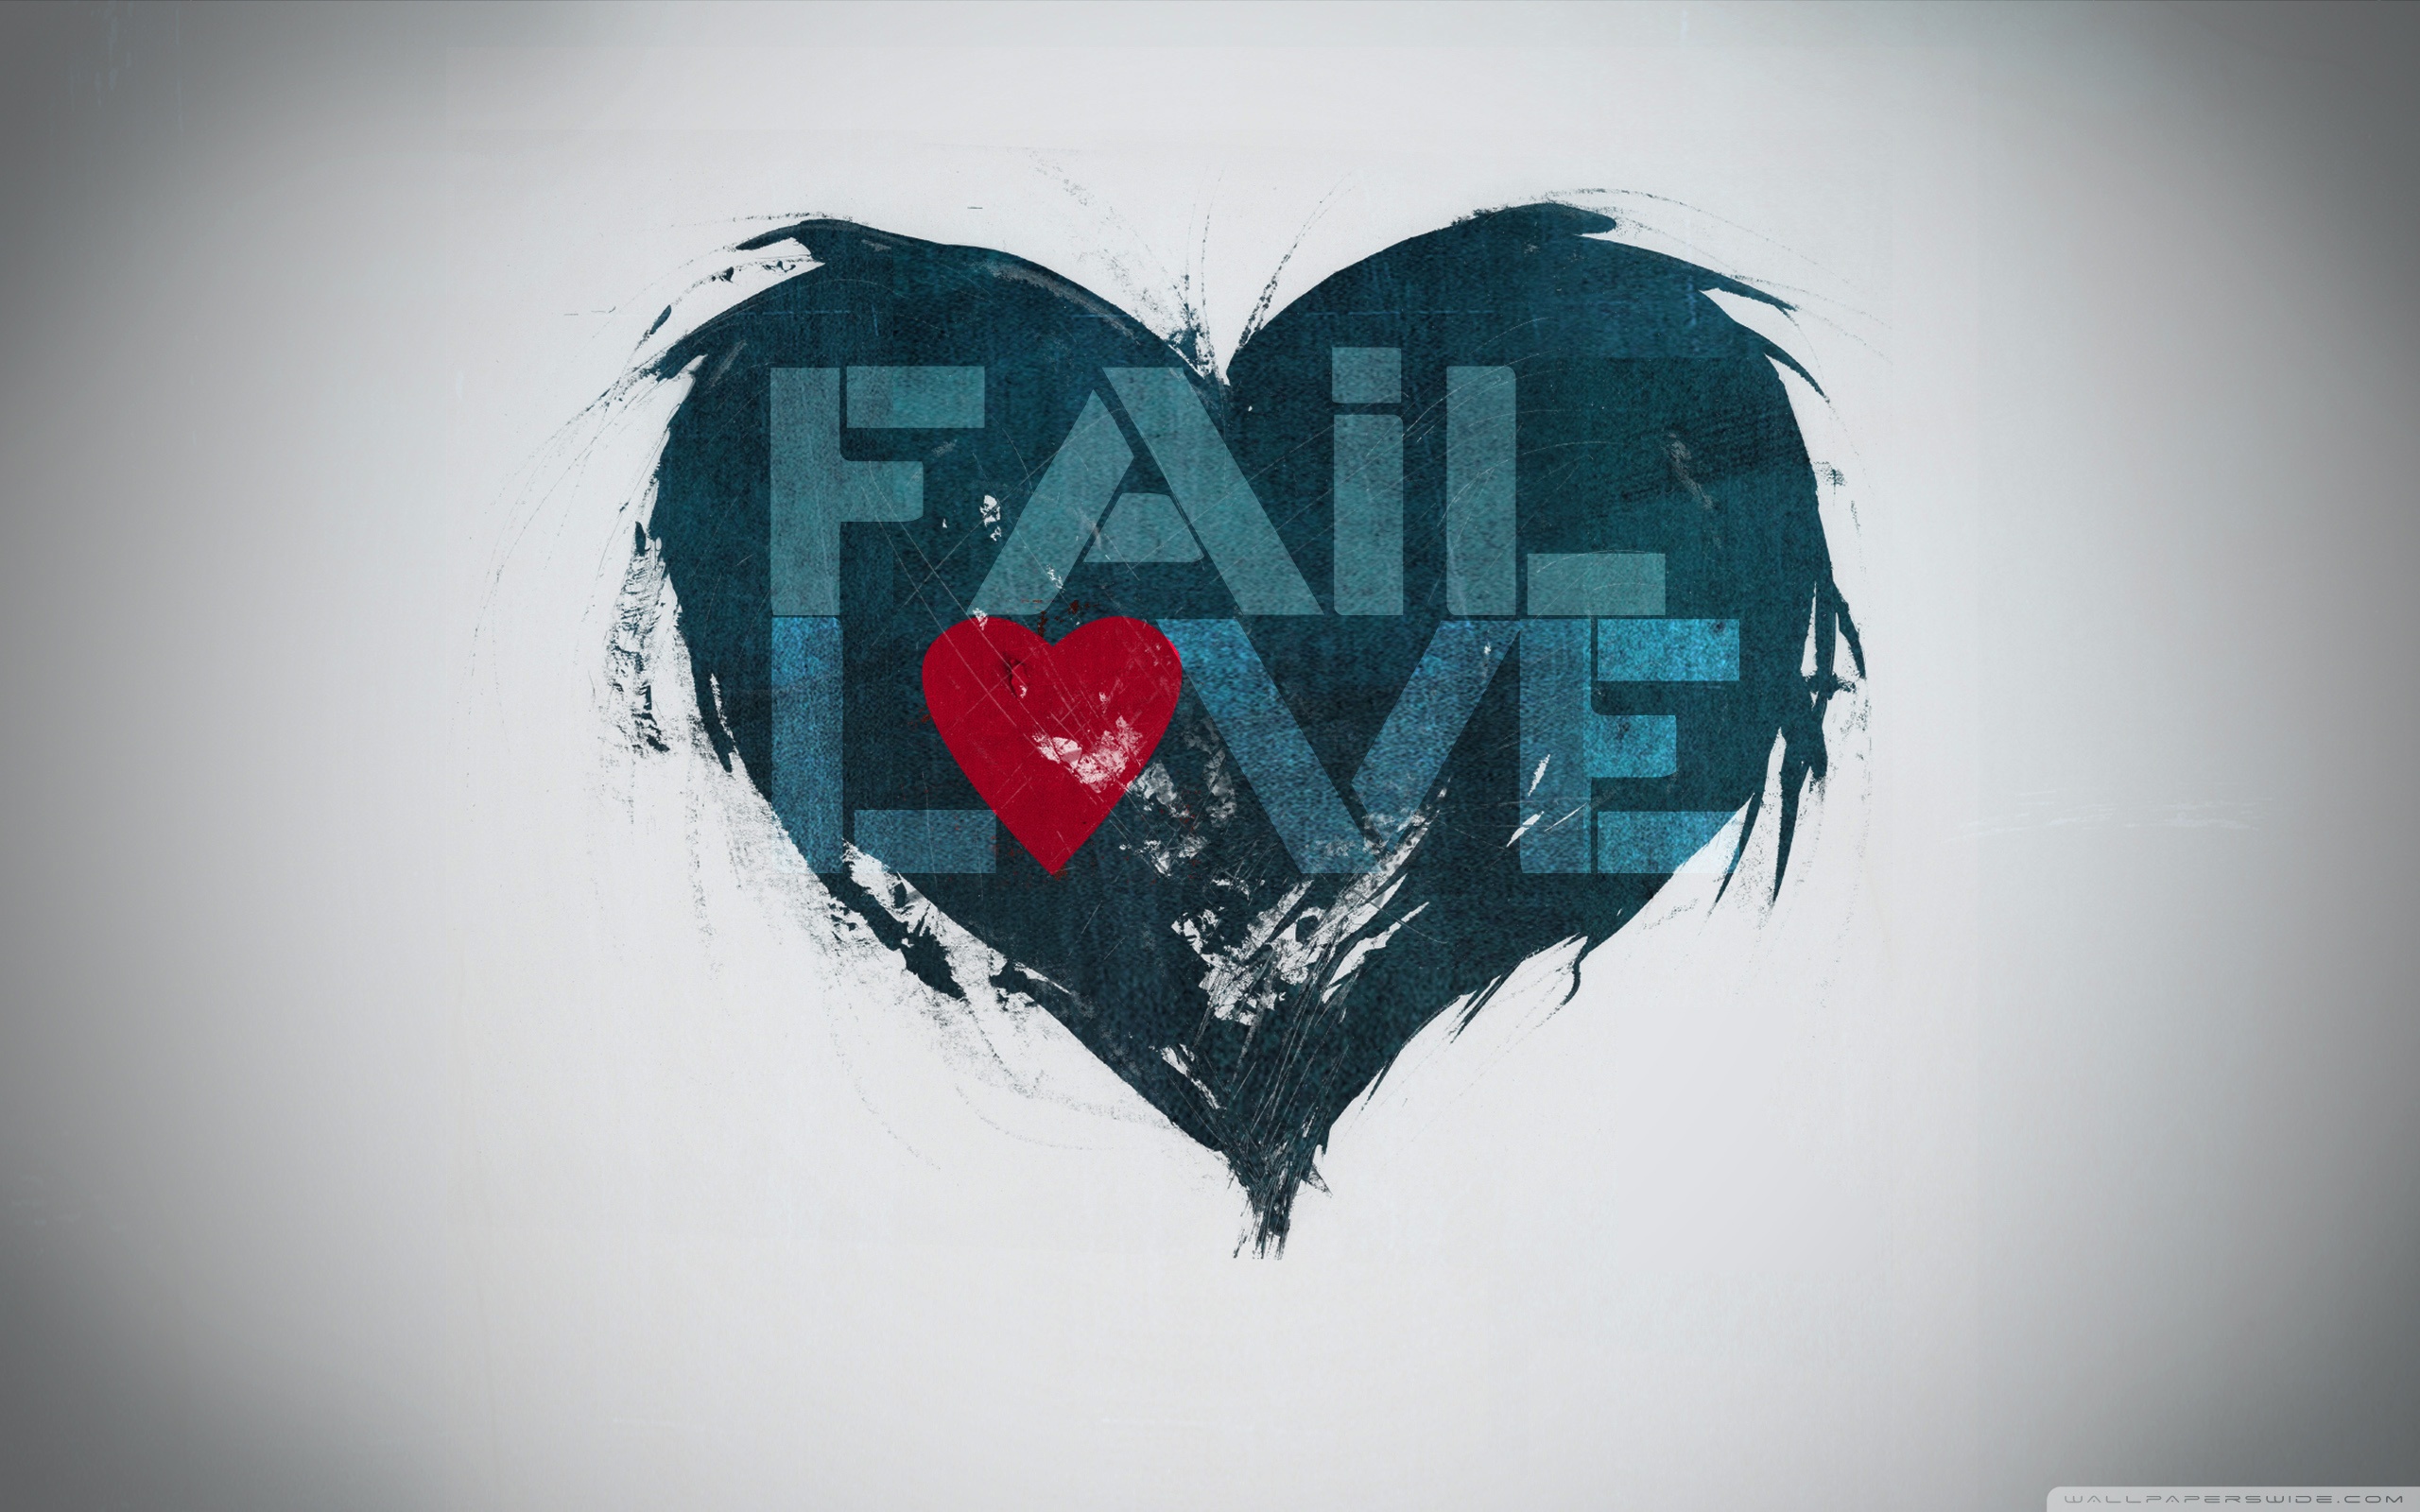 Yes I M Love Failure - 2560x1600 Wallpaper 